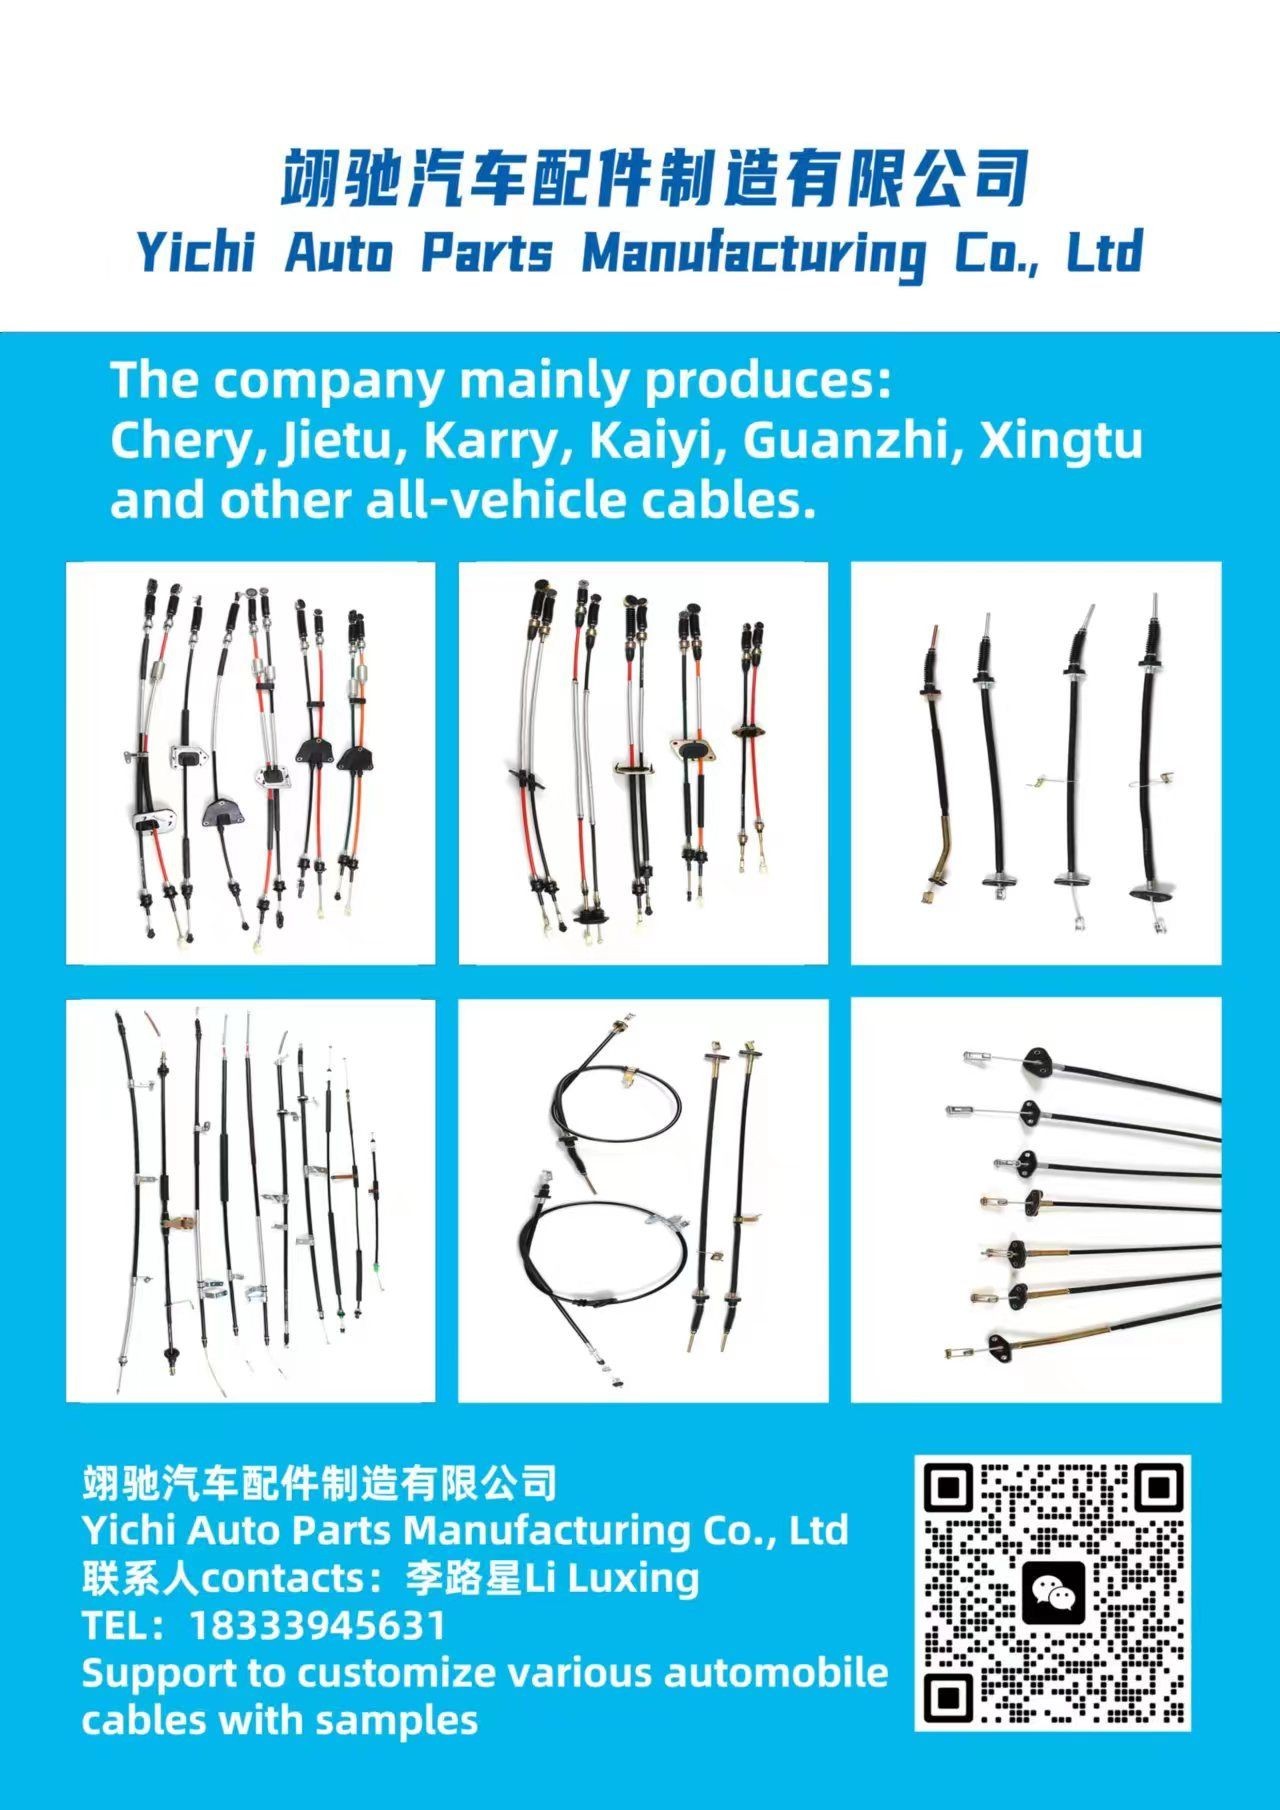 Yichi Auto Parts Manufacturing Co., Ltd.